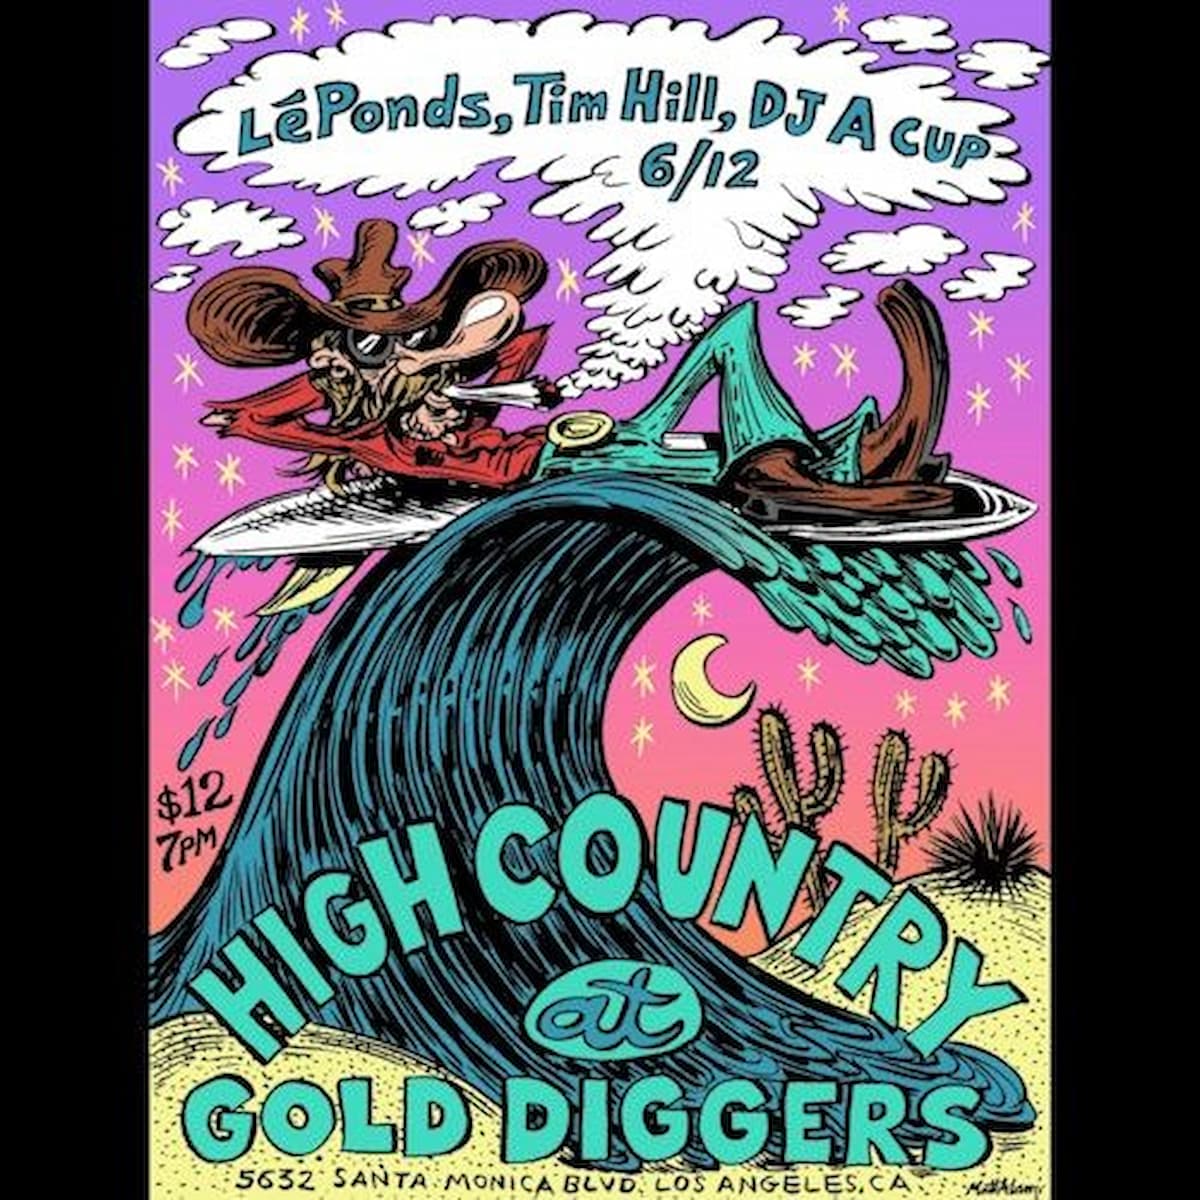 High Country featuring LéPonds / Tim Hill / DJ A Cup